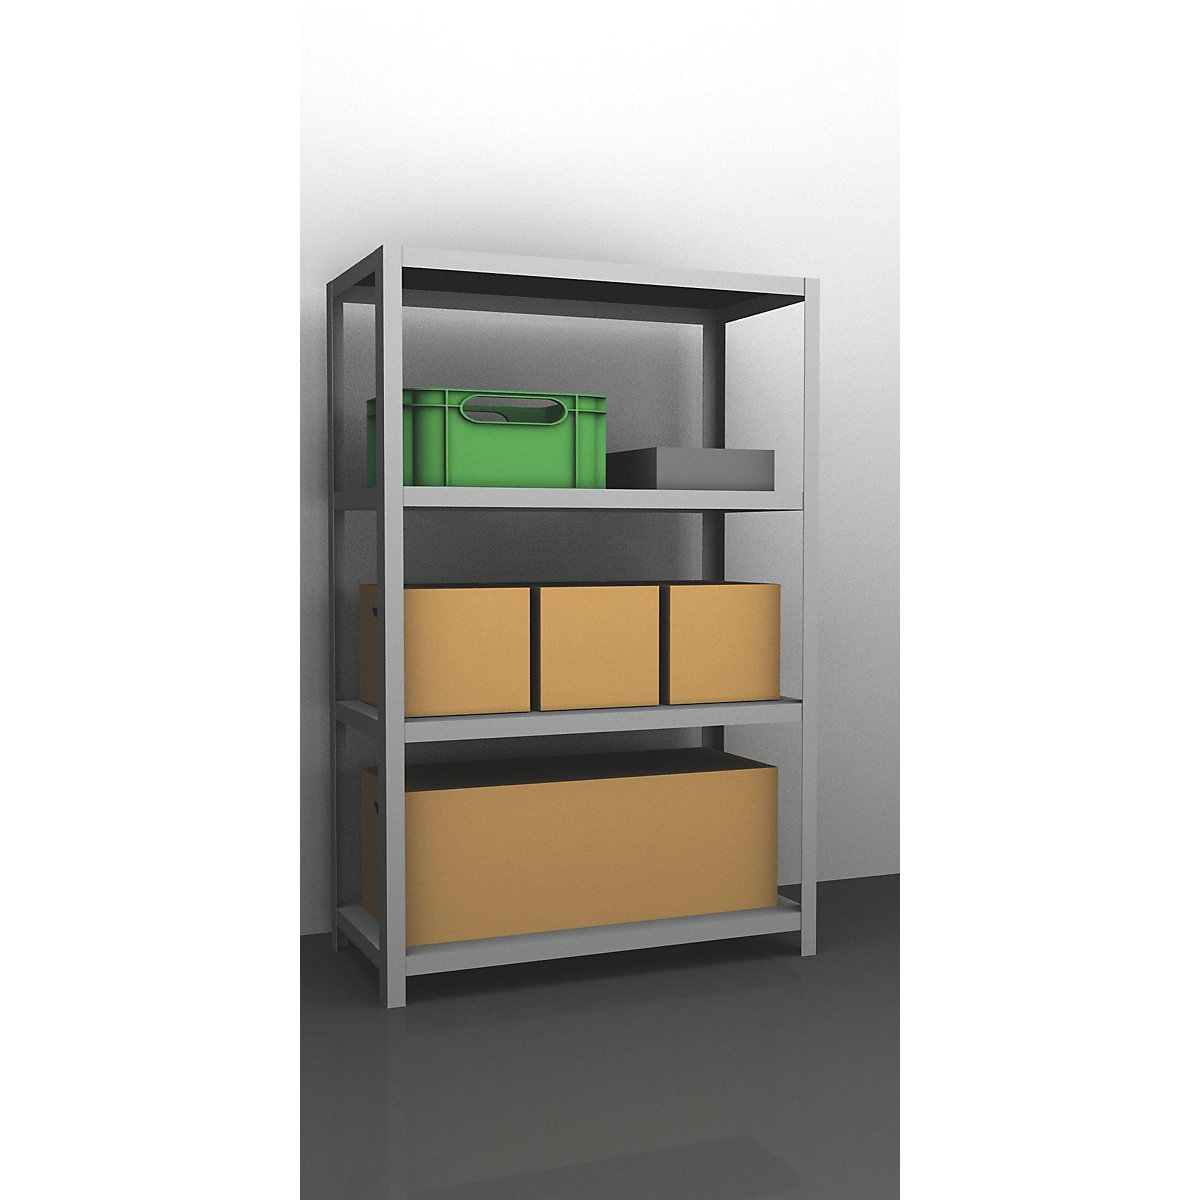 Bolt-together storage shelving, zinc plated, medium duty – eurokraft pro, shelf unit height 1500 mm, shelf width 1000 mm, depth 600 mm, standard shelf unit-6